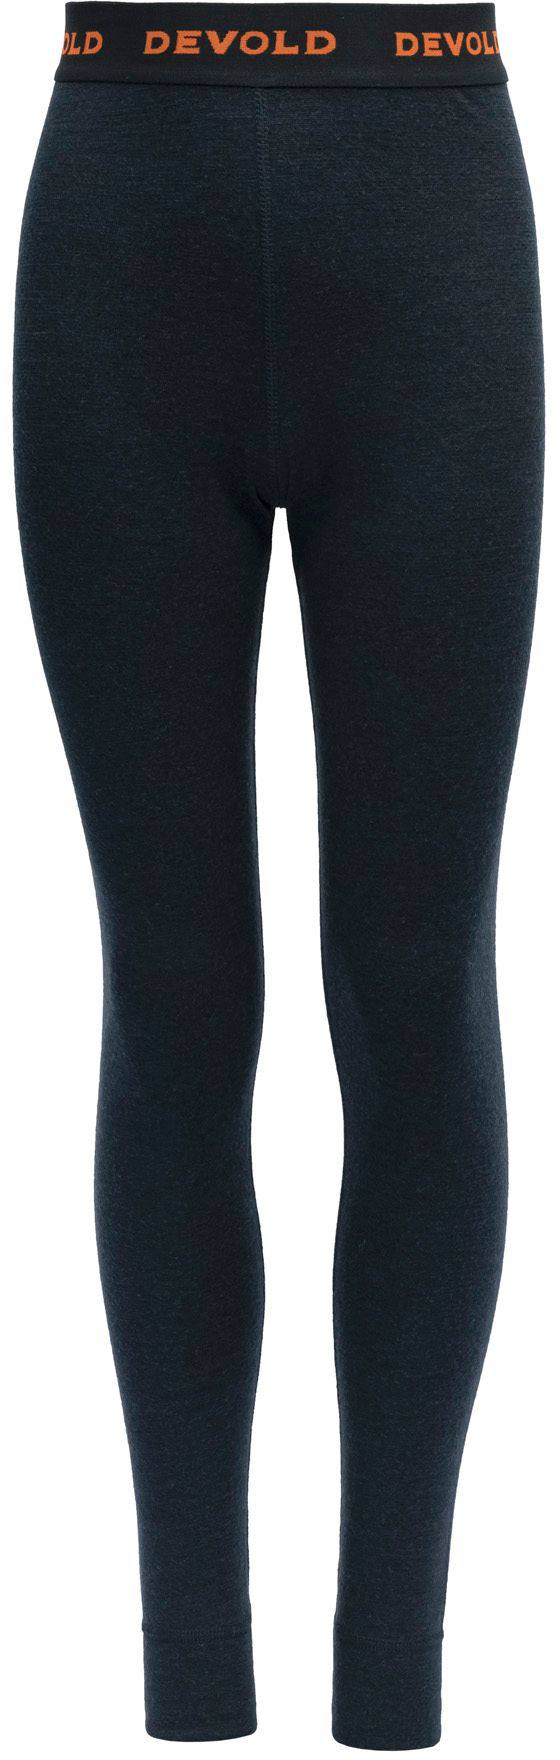 Icebreaker 200 Oasis Leggings Women's NWT Size X-Large color Black